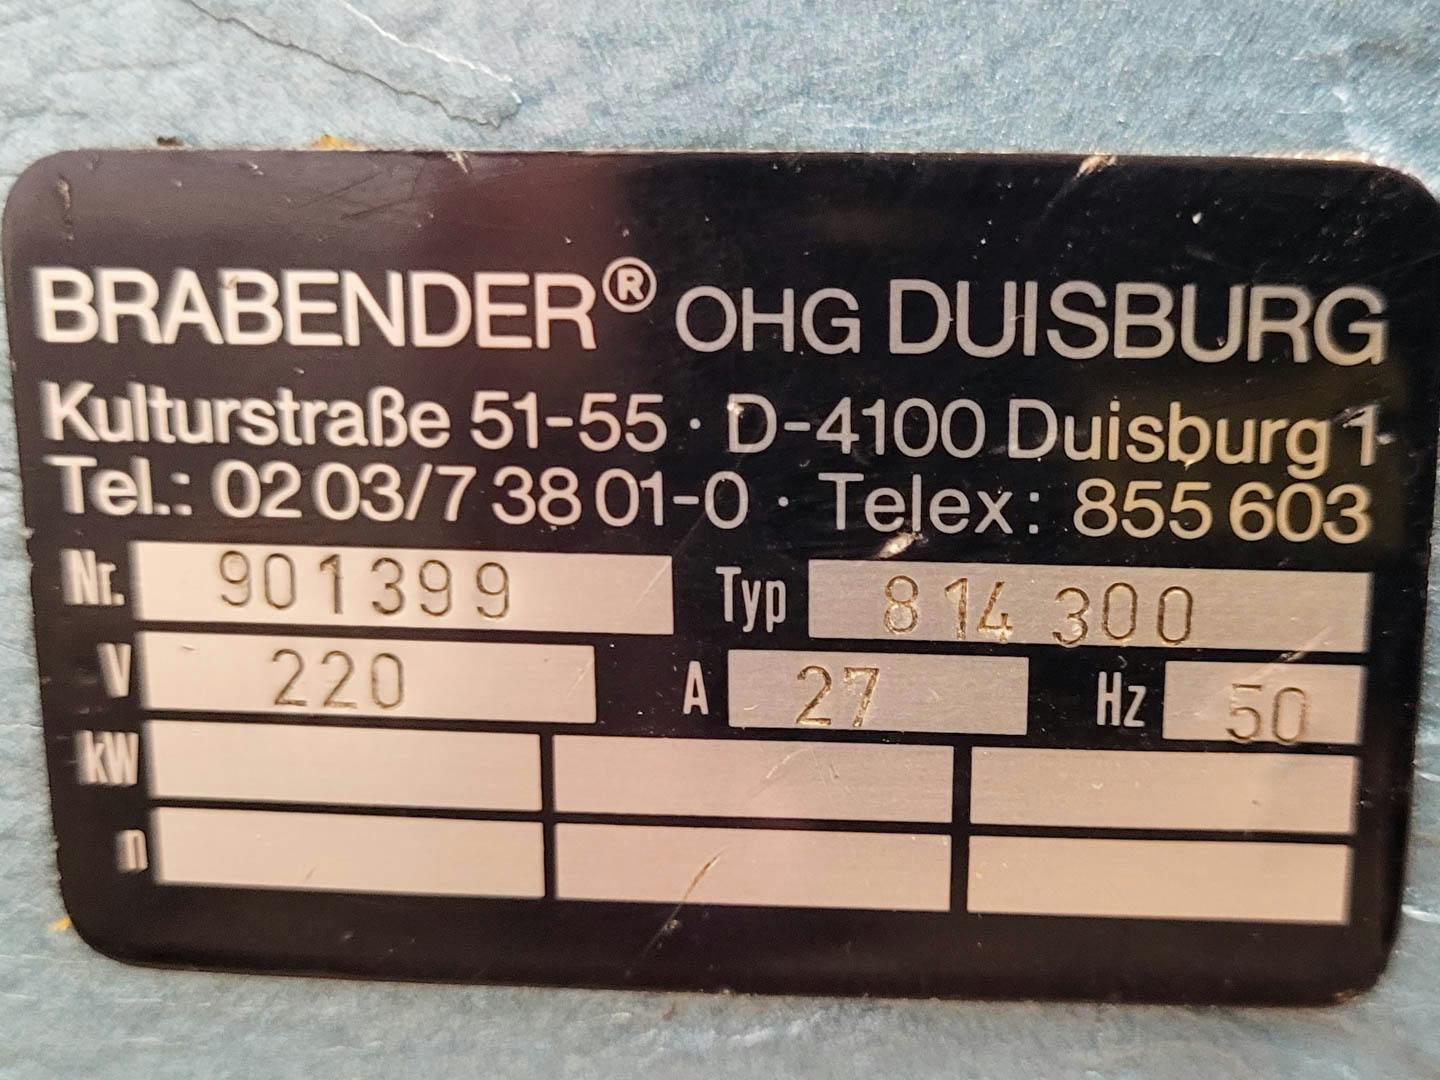 Brabender Plasti-Corder PL2000, Eurotherm Type 808 - Wytłaczarka jednoślimakowa - image 11